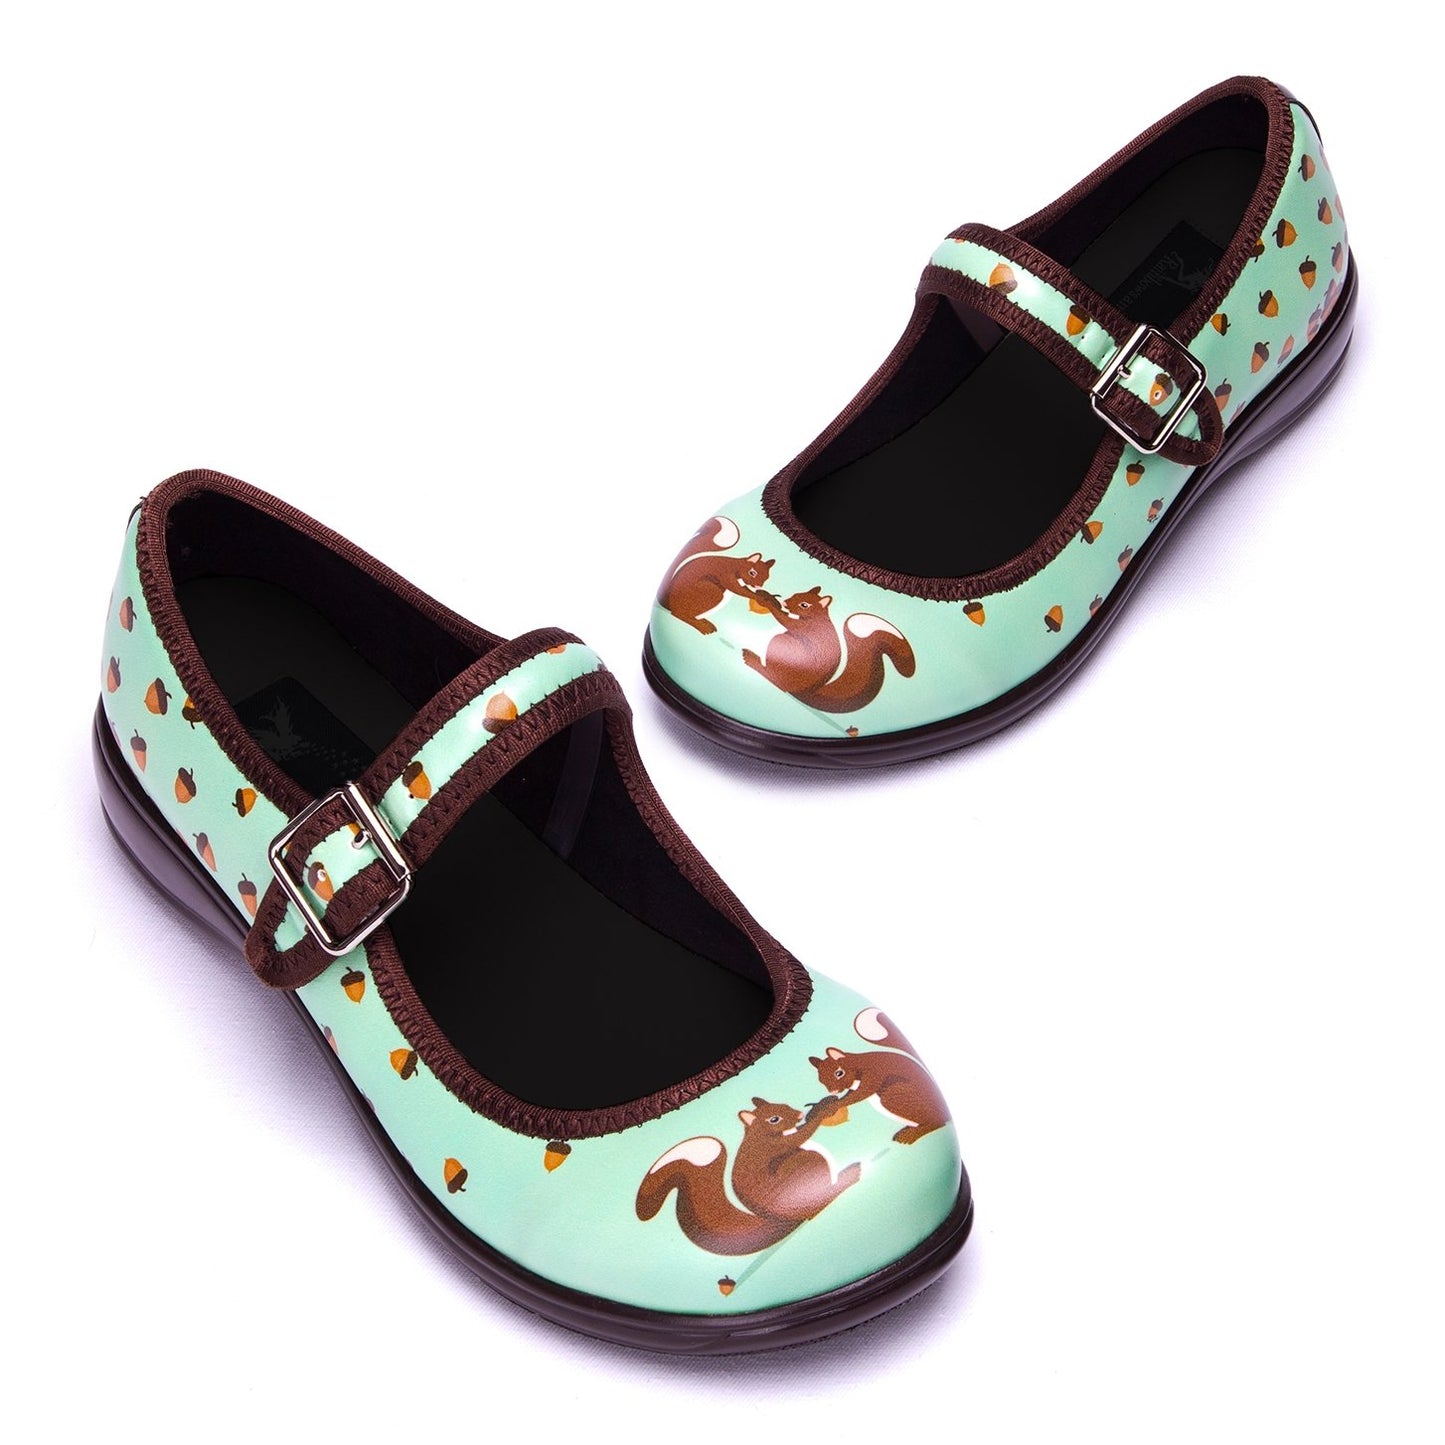 Mary Jane - Nutz - Rockamilly-Shoes-Vintage